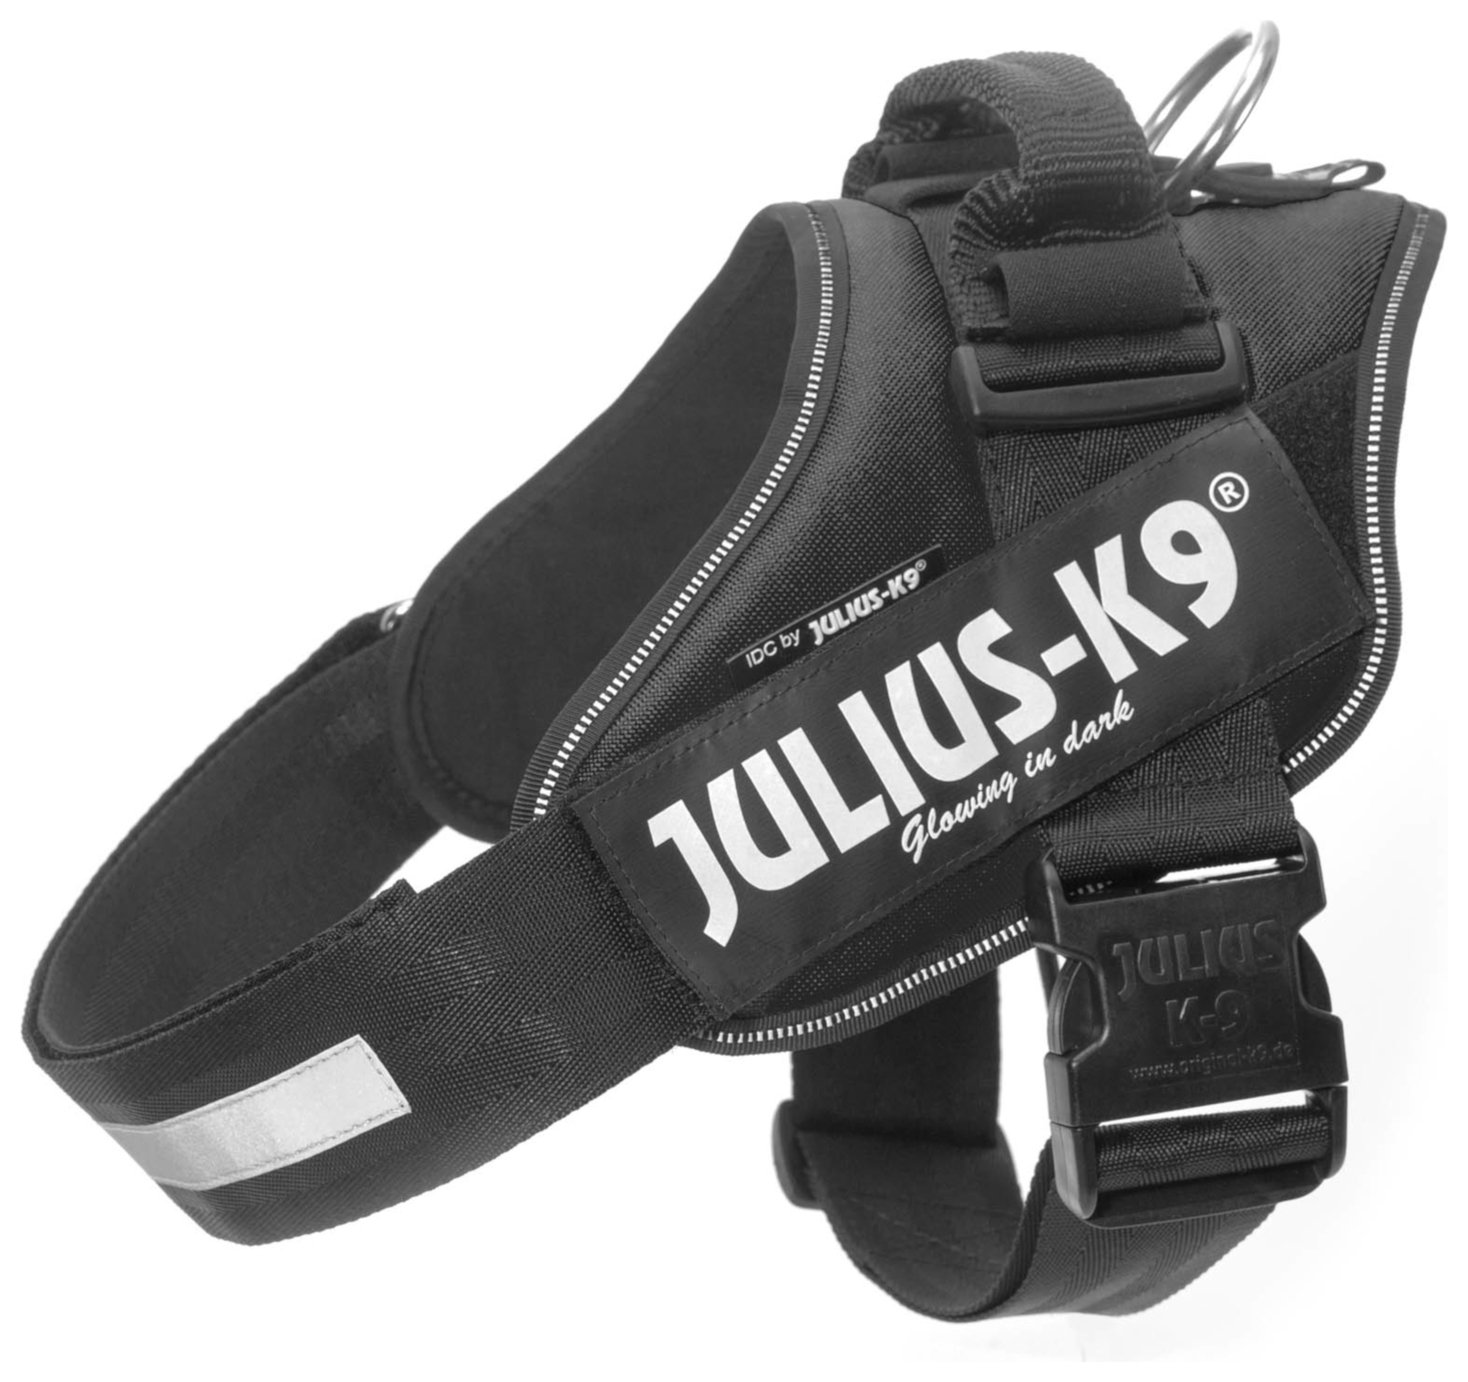 Julius-K9 IDC Power Harness - Black 1